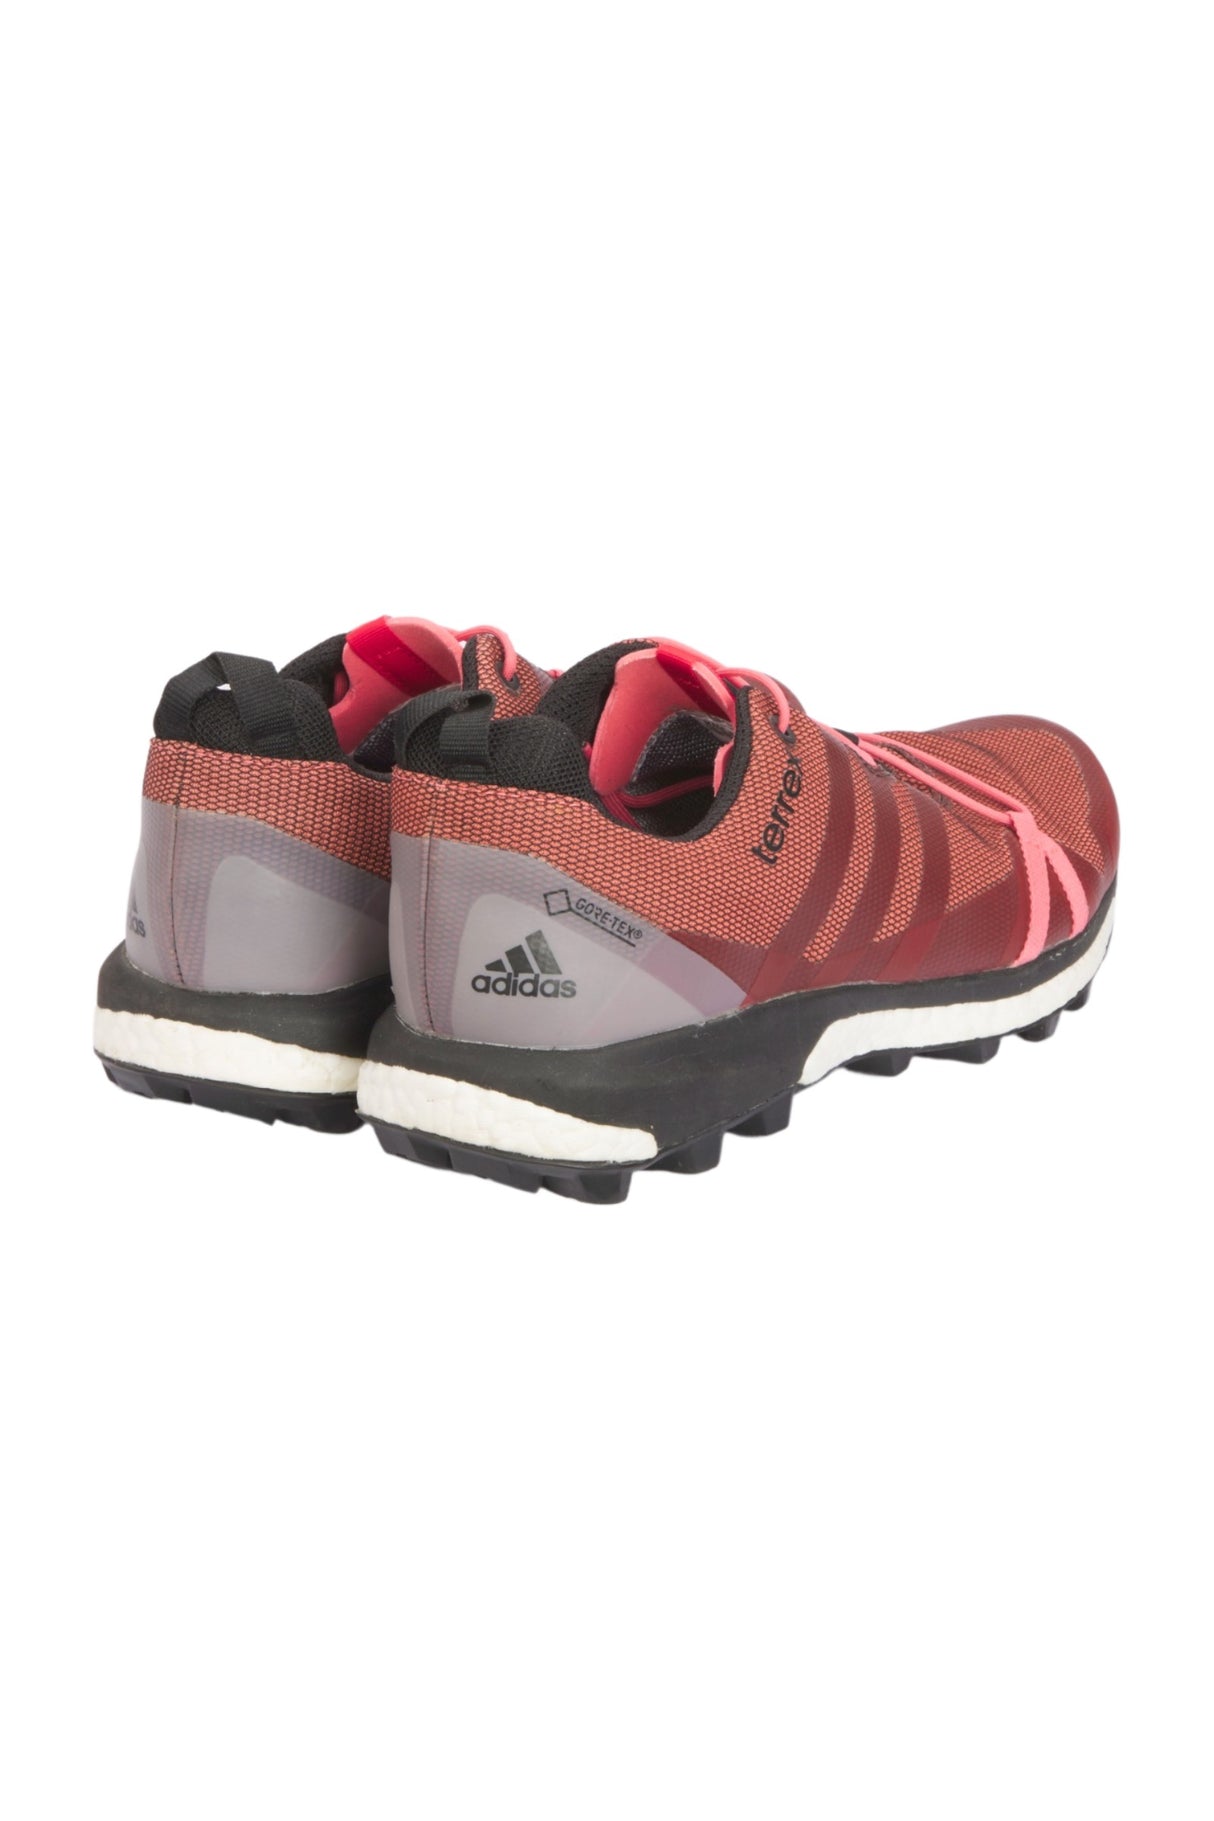 Adidas Terrex Laufschuhe & Trailrunningschuhe für Herren